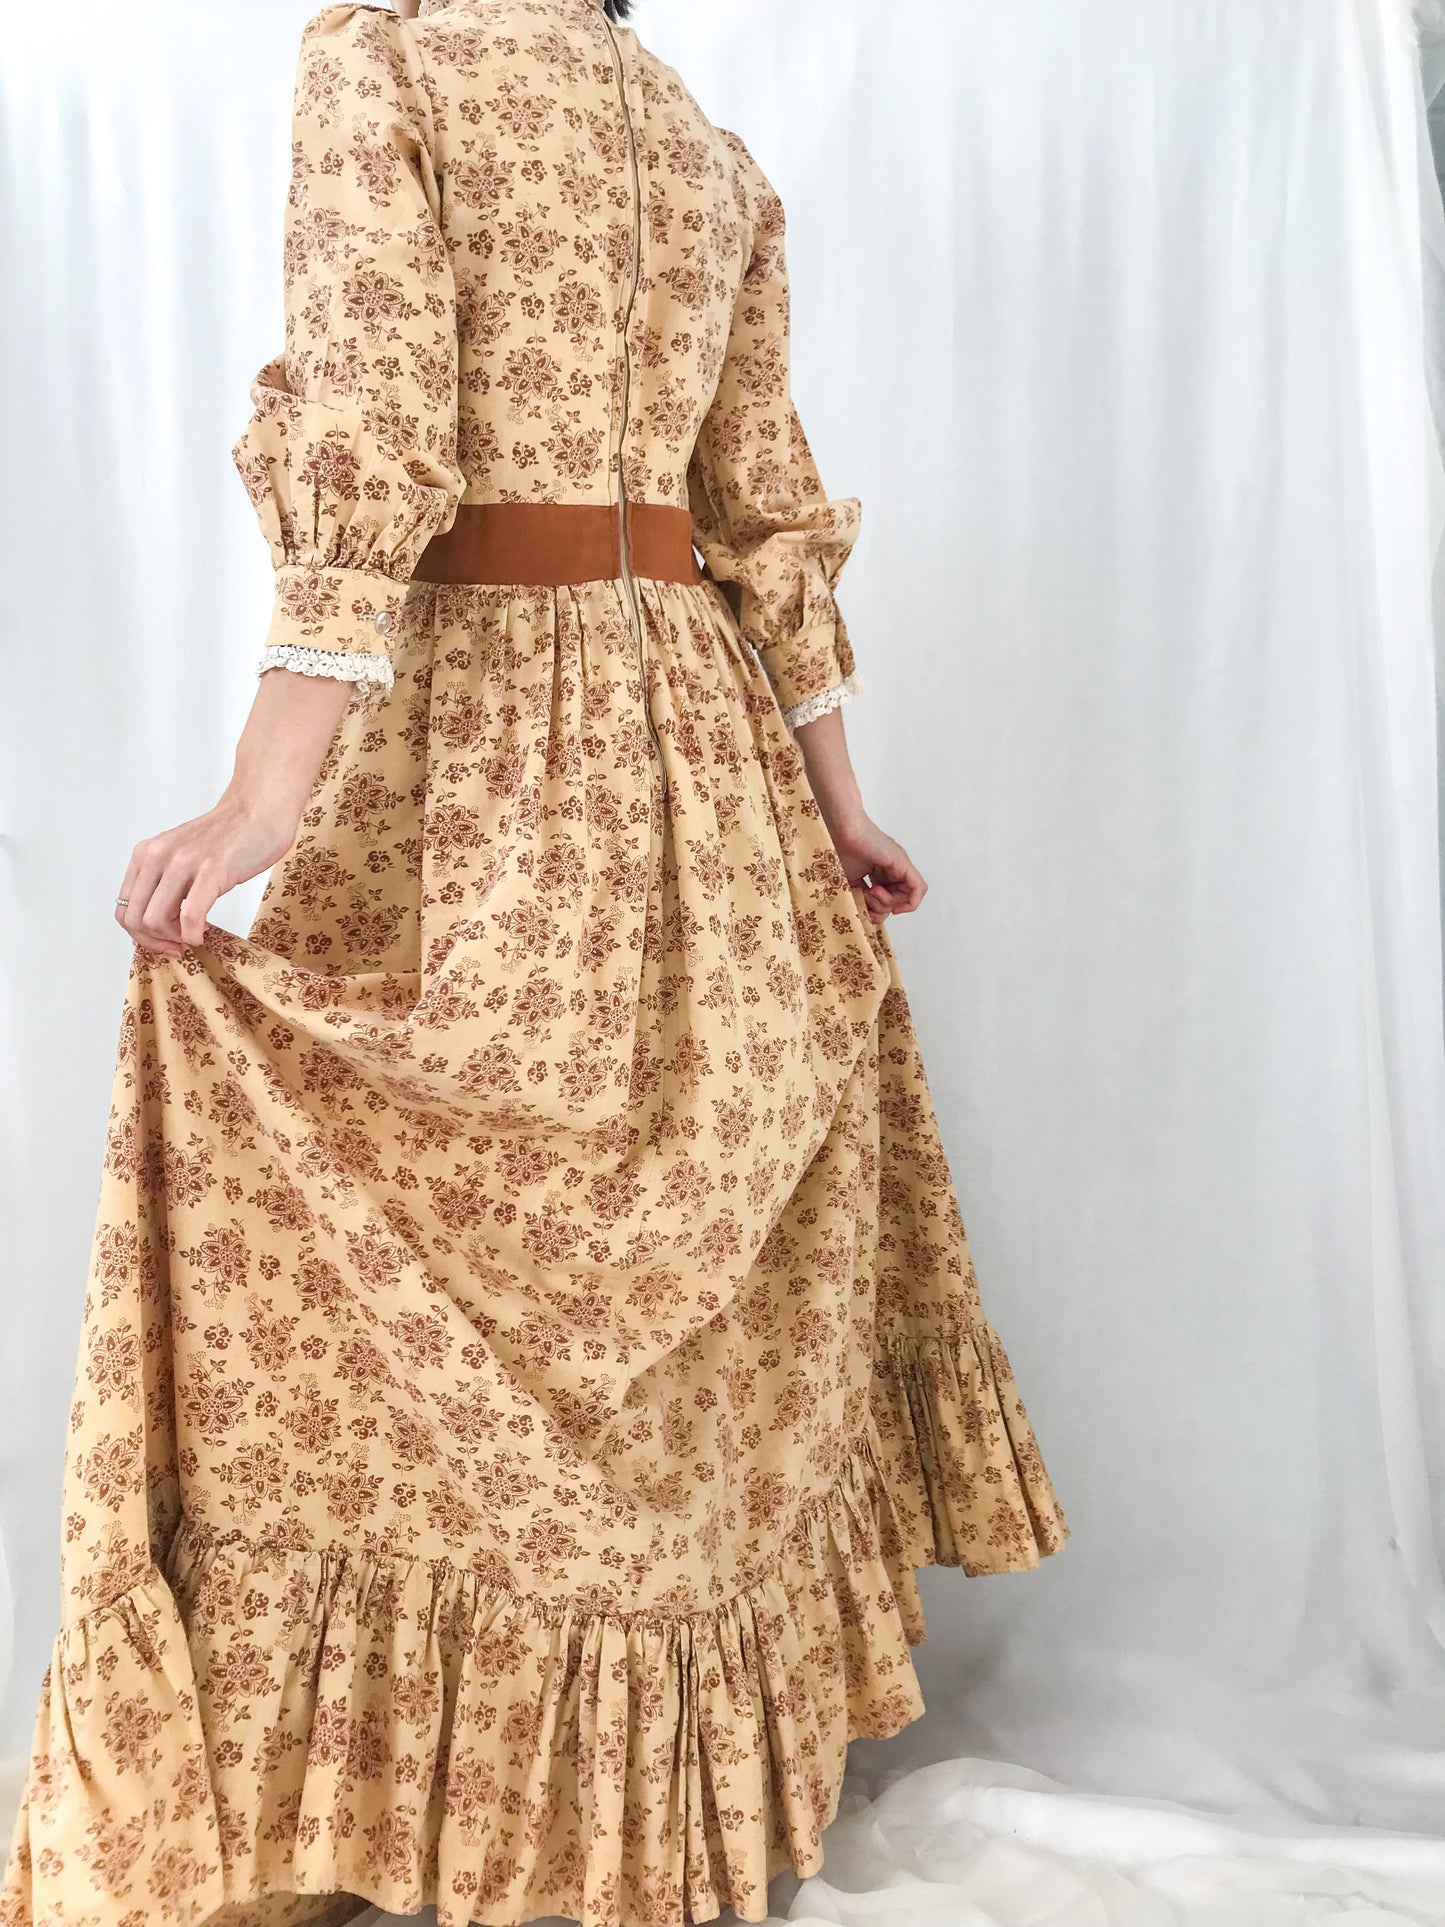 Vintage Laura Ashley Floral Prairie Dress